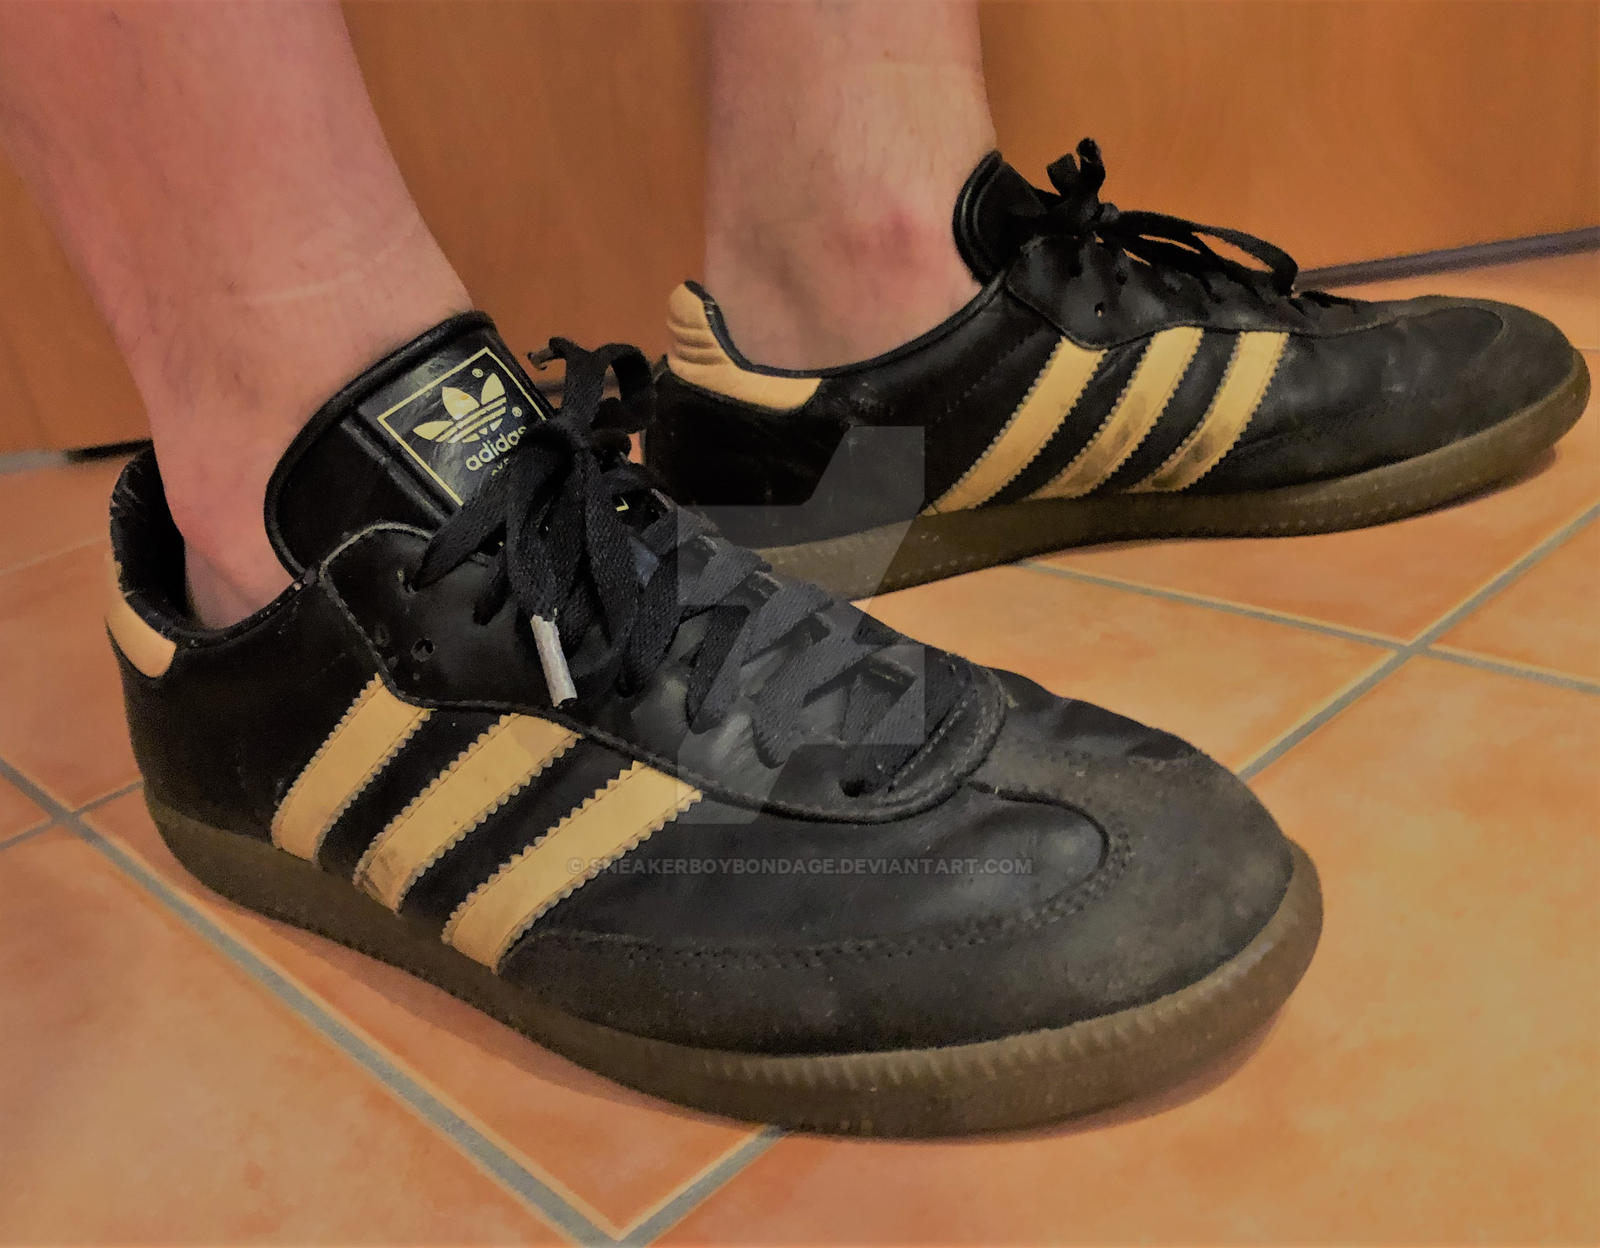 stribe Funktionsfejl uren Boy sockless in Adidas Samba sneakers. by SneakerBoyBondage on DeviantArt